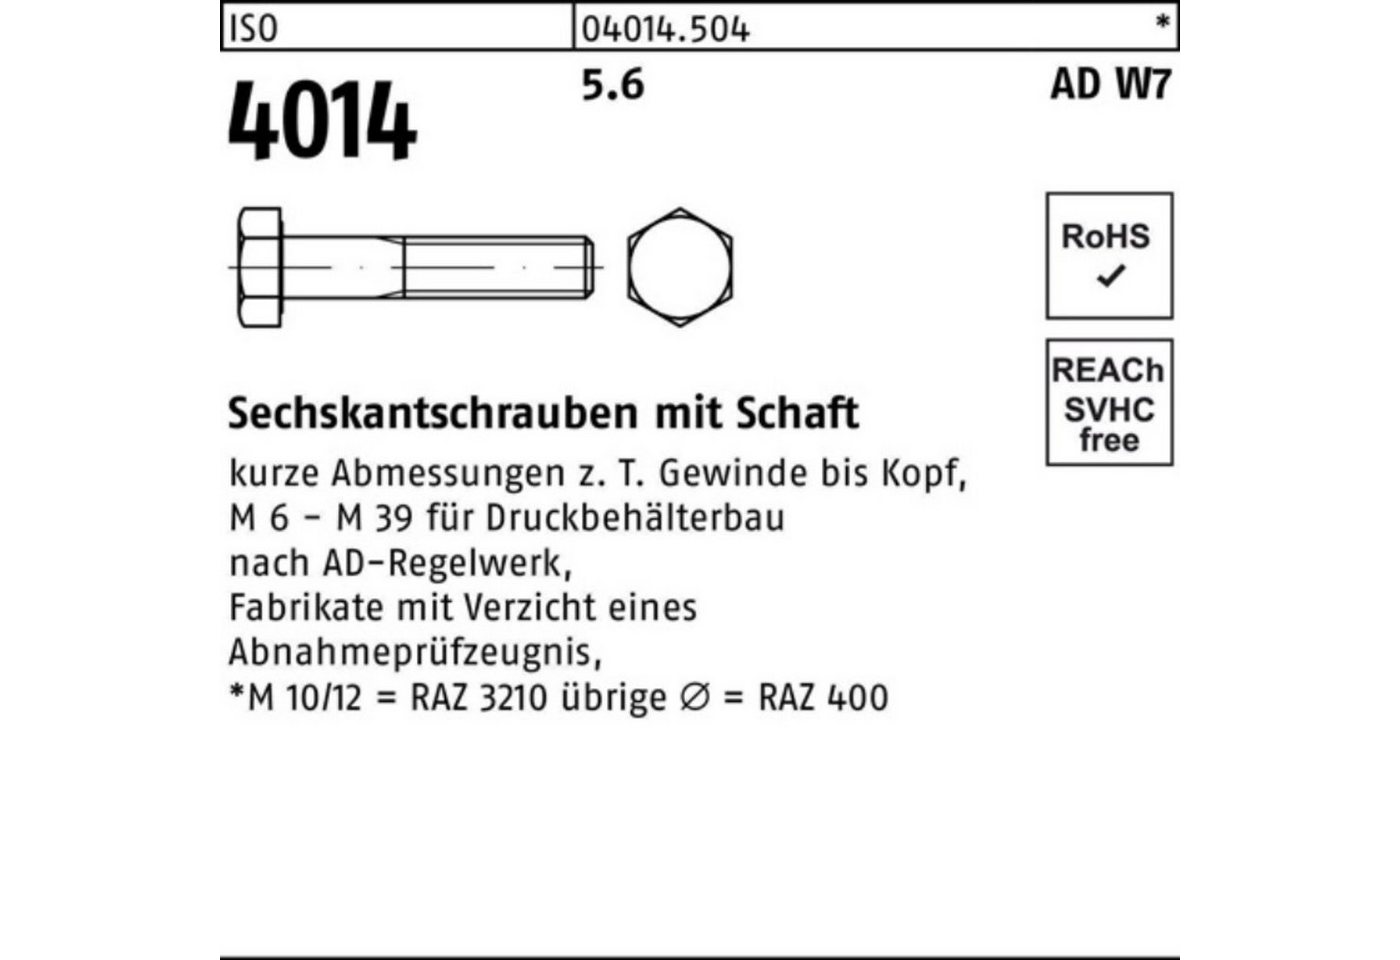 Bufab Sechskantschraube 100er Pack Sechskantschraube ISO 4014 Schaft M20x 250 5.6 W7 1 Stück von Bufab